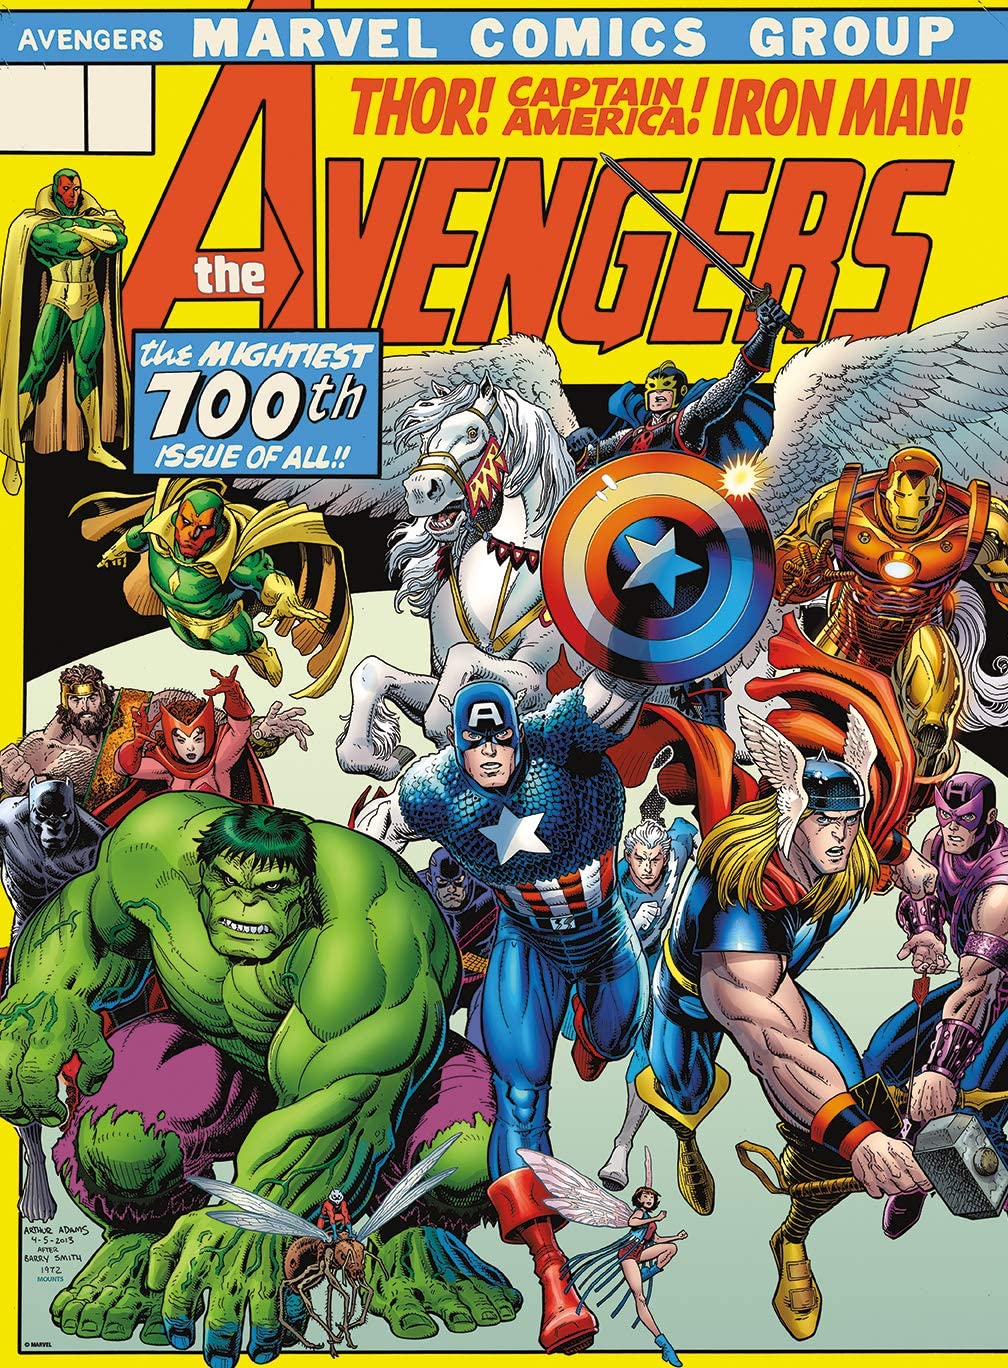 Aquarius Marvel Avengers Cover 500-Piece Jigsaw Puzzle